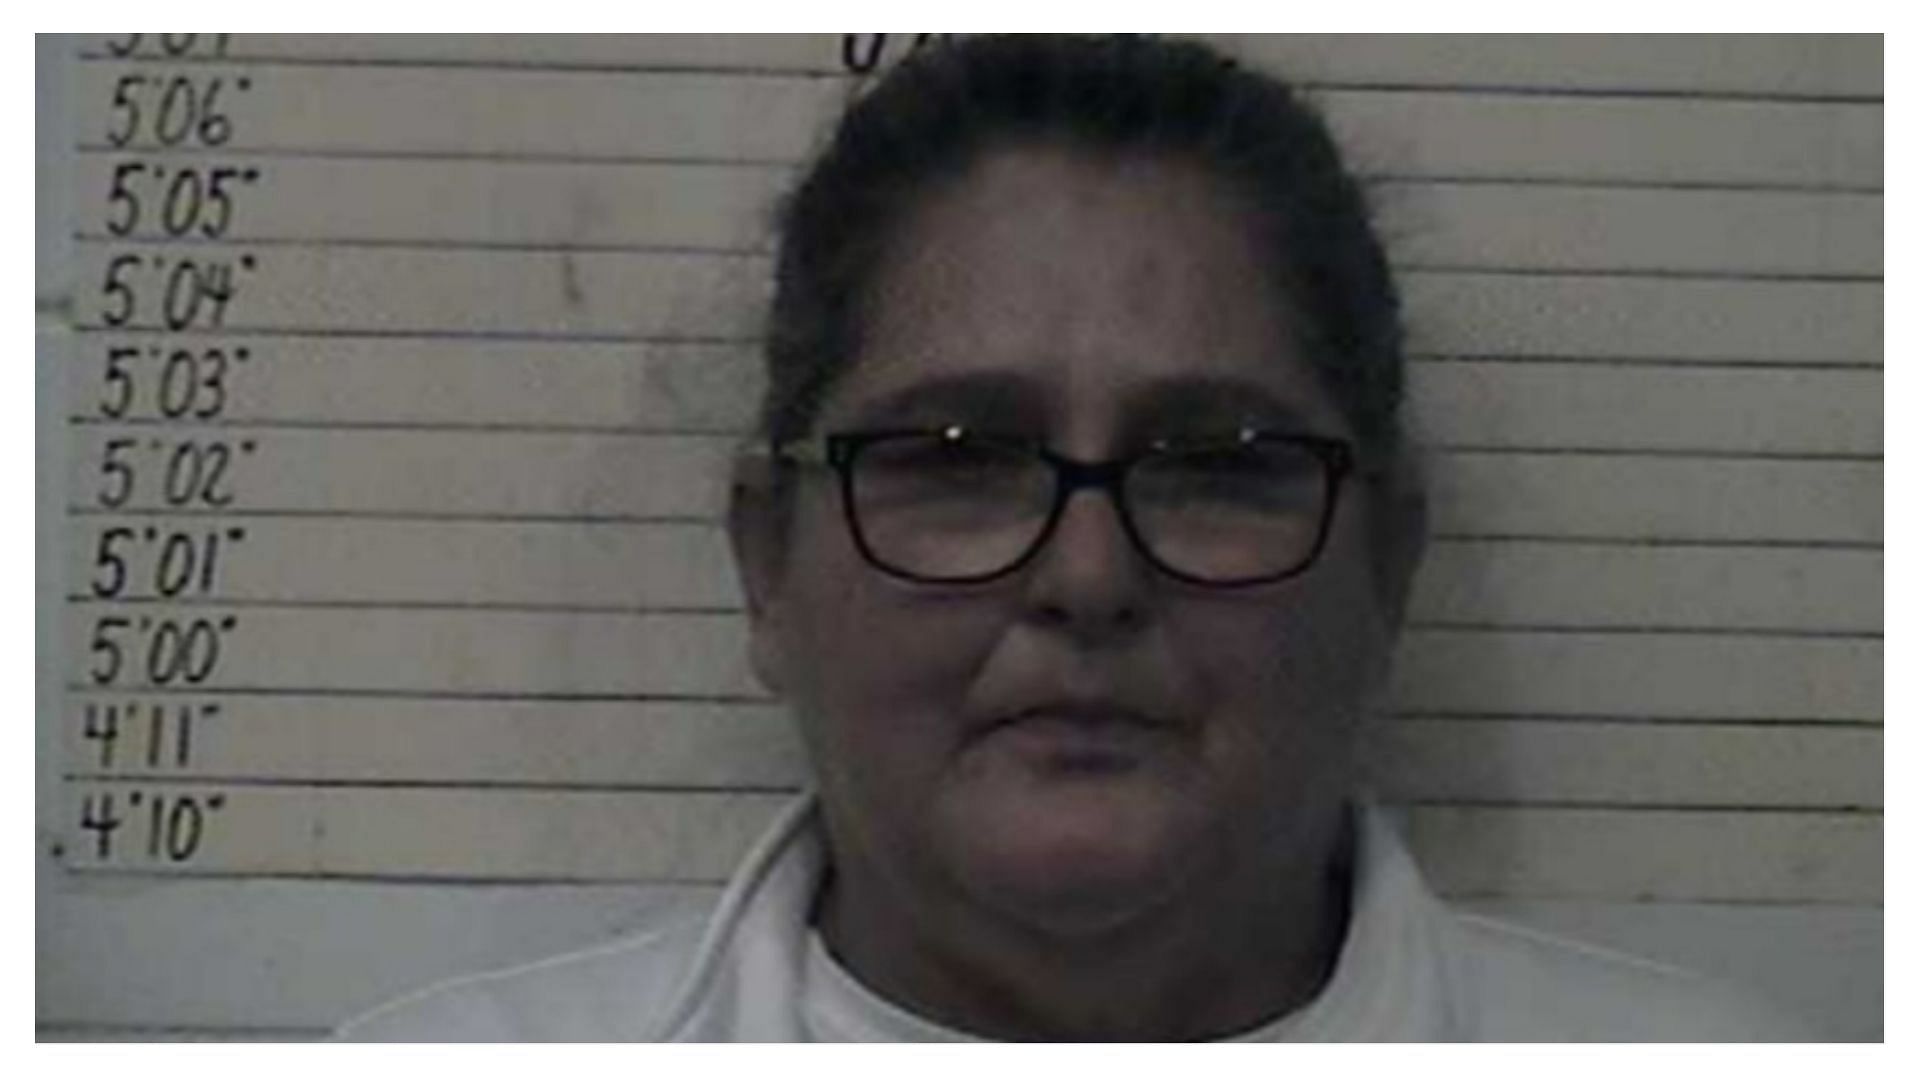 Allen was arrested after she confessed to killing her newborn baby (Image via OSBI)